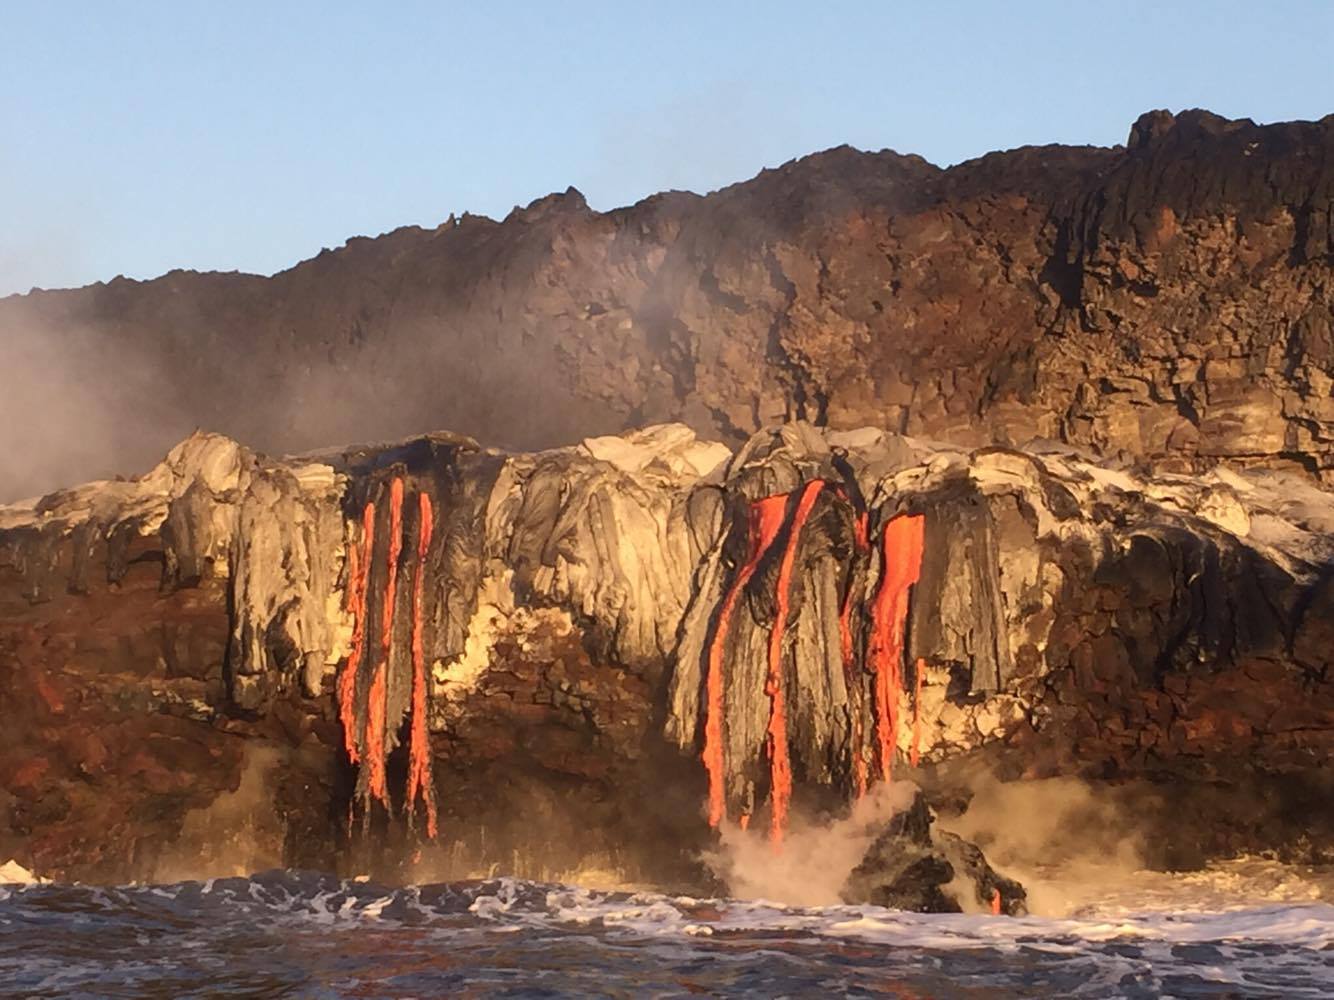 Kīlauea lava ocean entry, 10.13.16. PC: Robin Pilus, special thanks to Captain Skosh - Hoʻokupu Lava Tours.